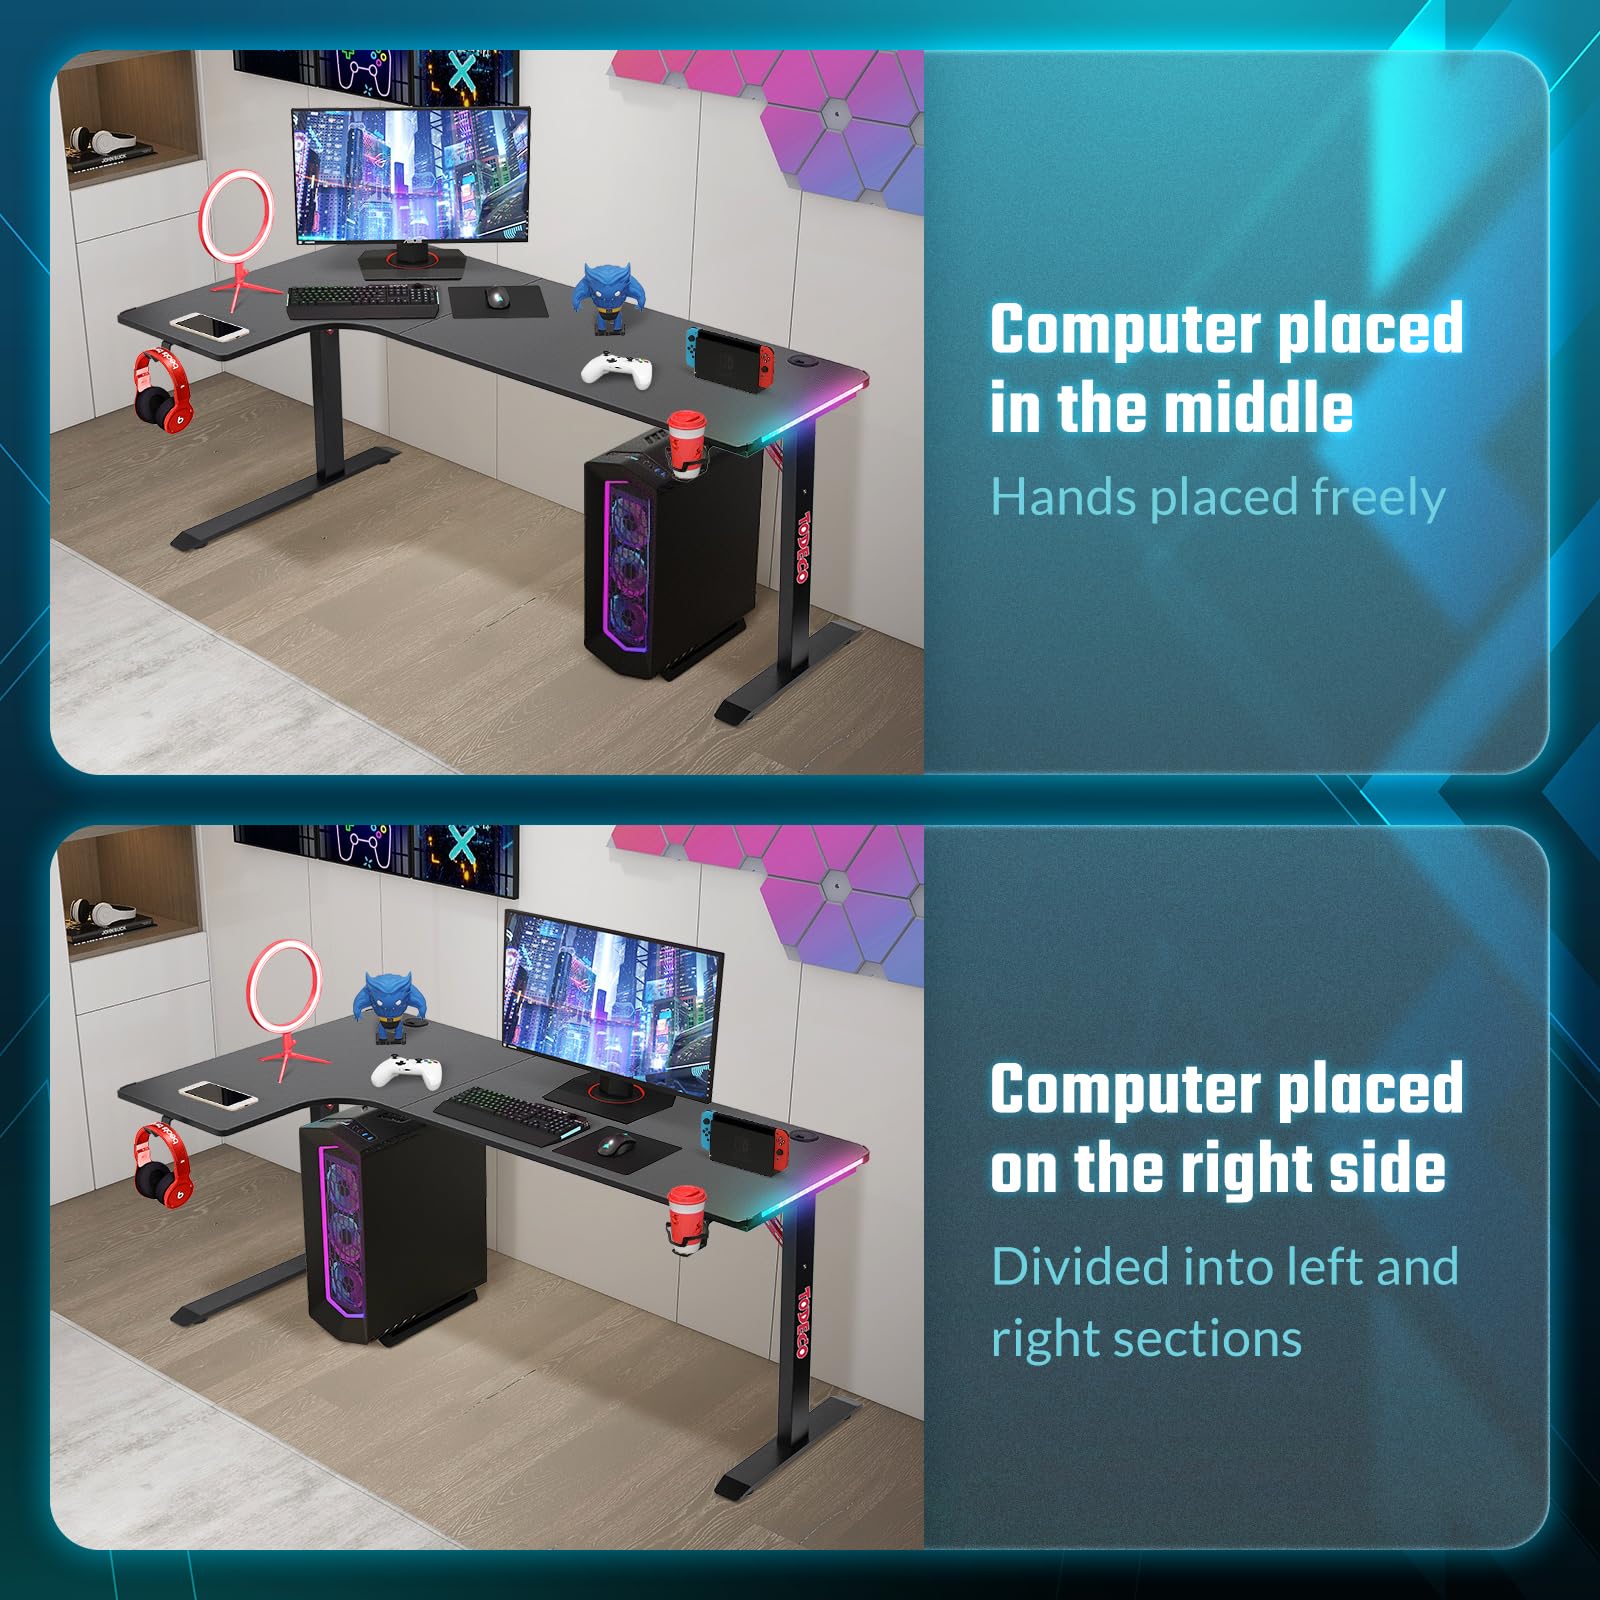 Todeco-Corner-Desk-L-shaped-Desk-LED-Gaming-Desk-160-x-100cm-Large-Gaming-Desk-with-Carbon-Fiber-Top-with-Cup-Holder-and-Headphone-Hook